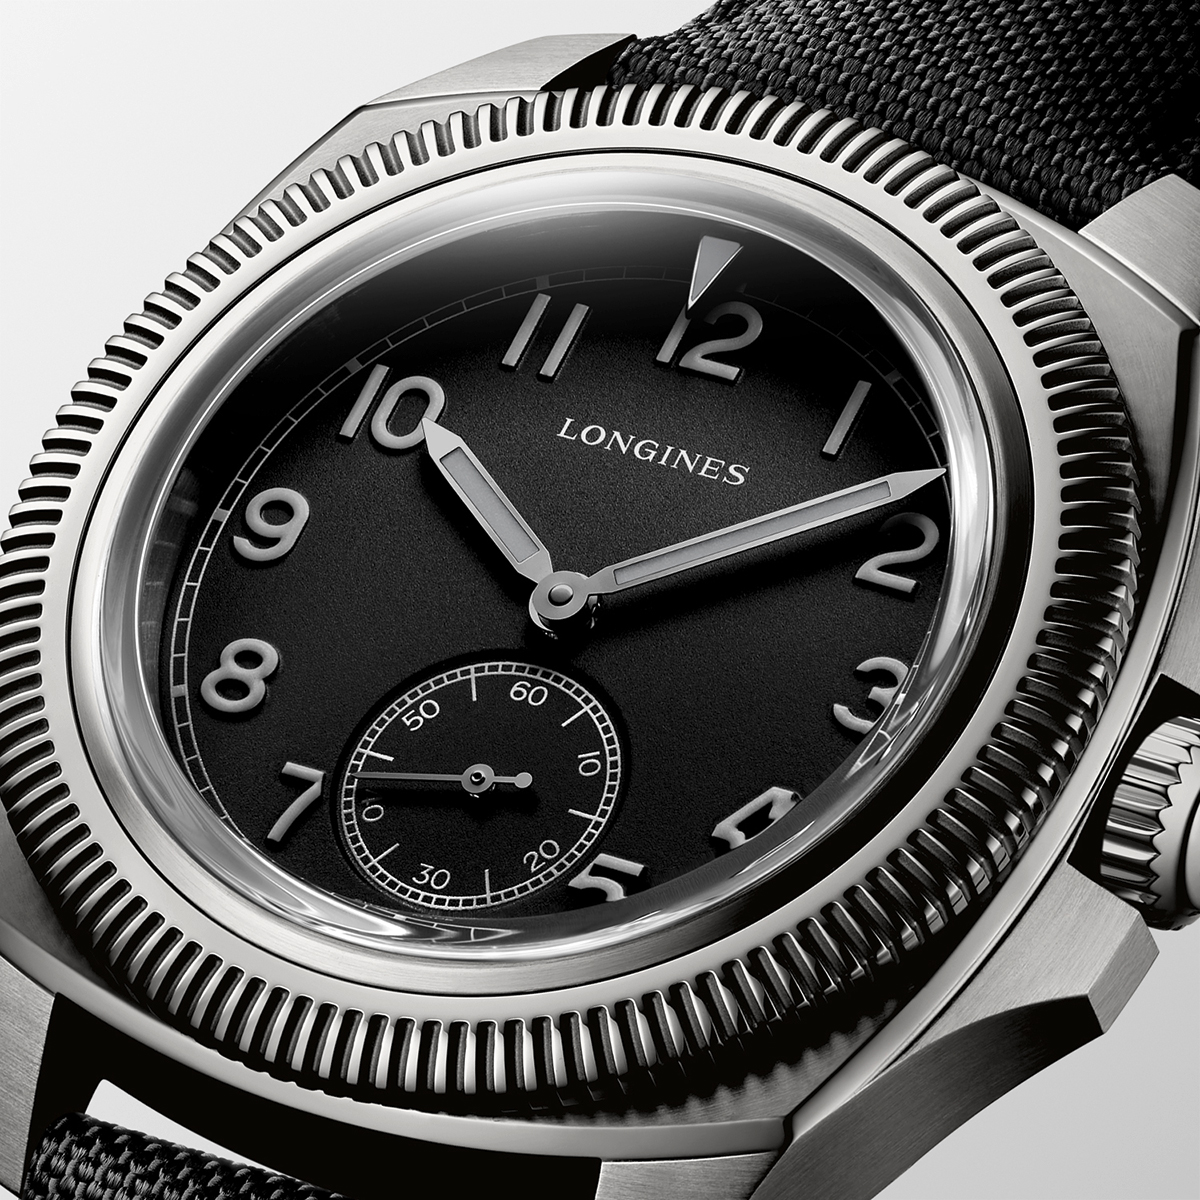 Cortina-Watch-Longines-Pilot-Matejek-close-shot